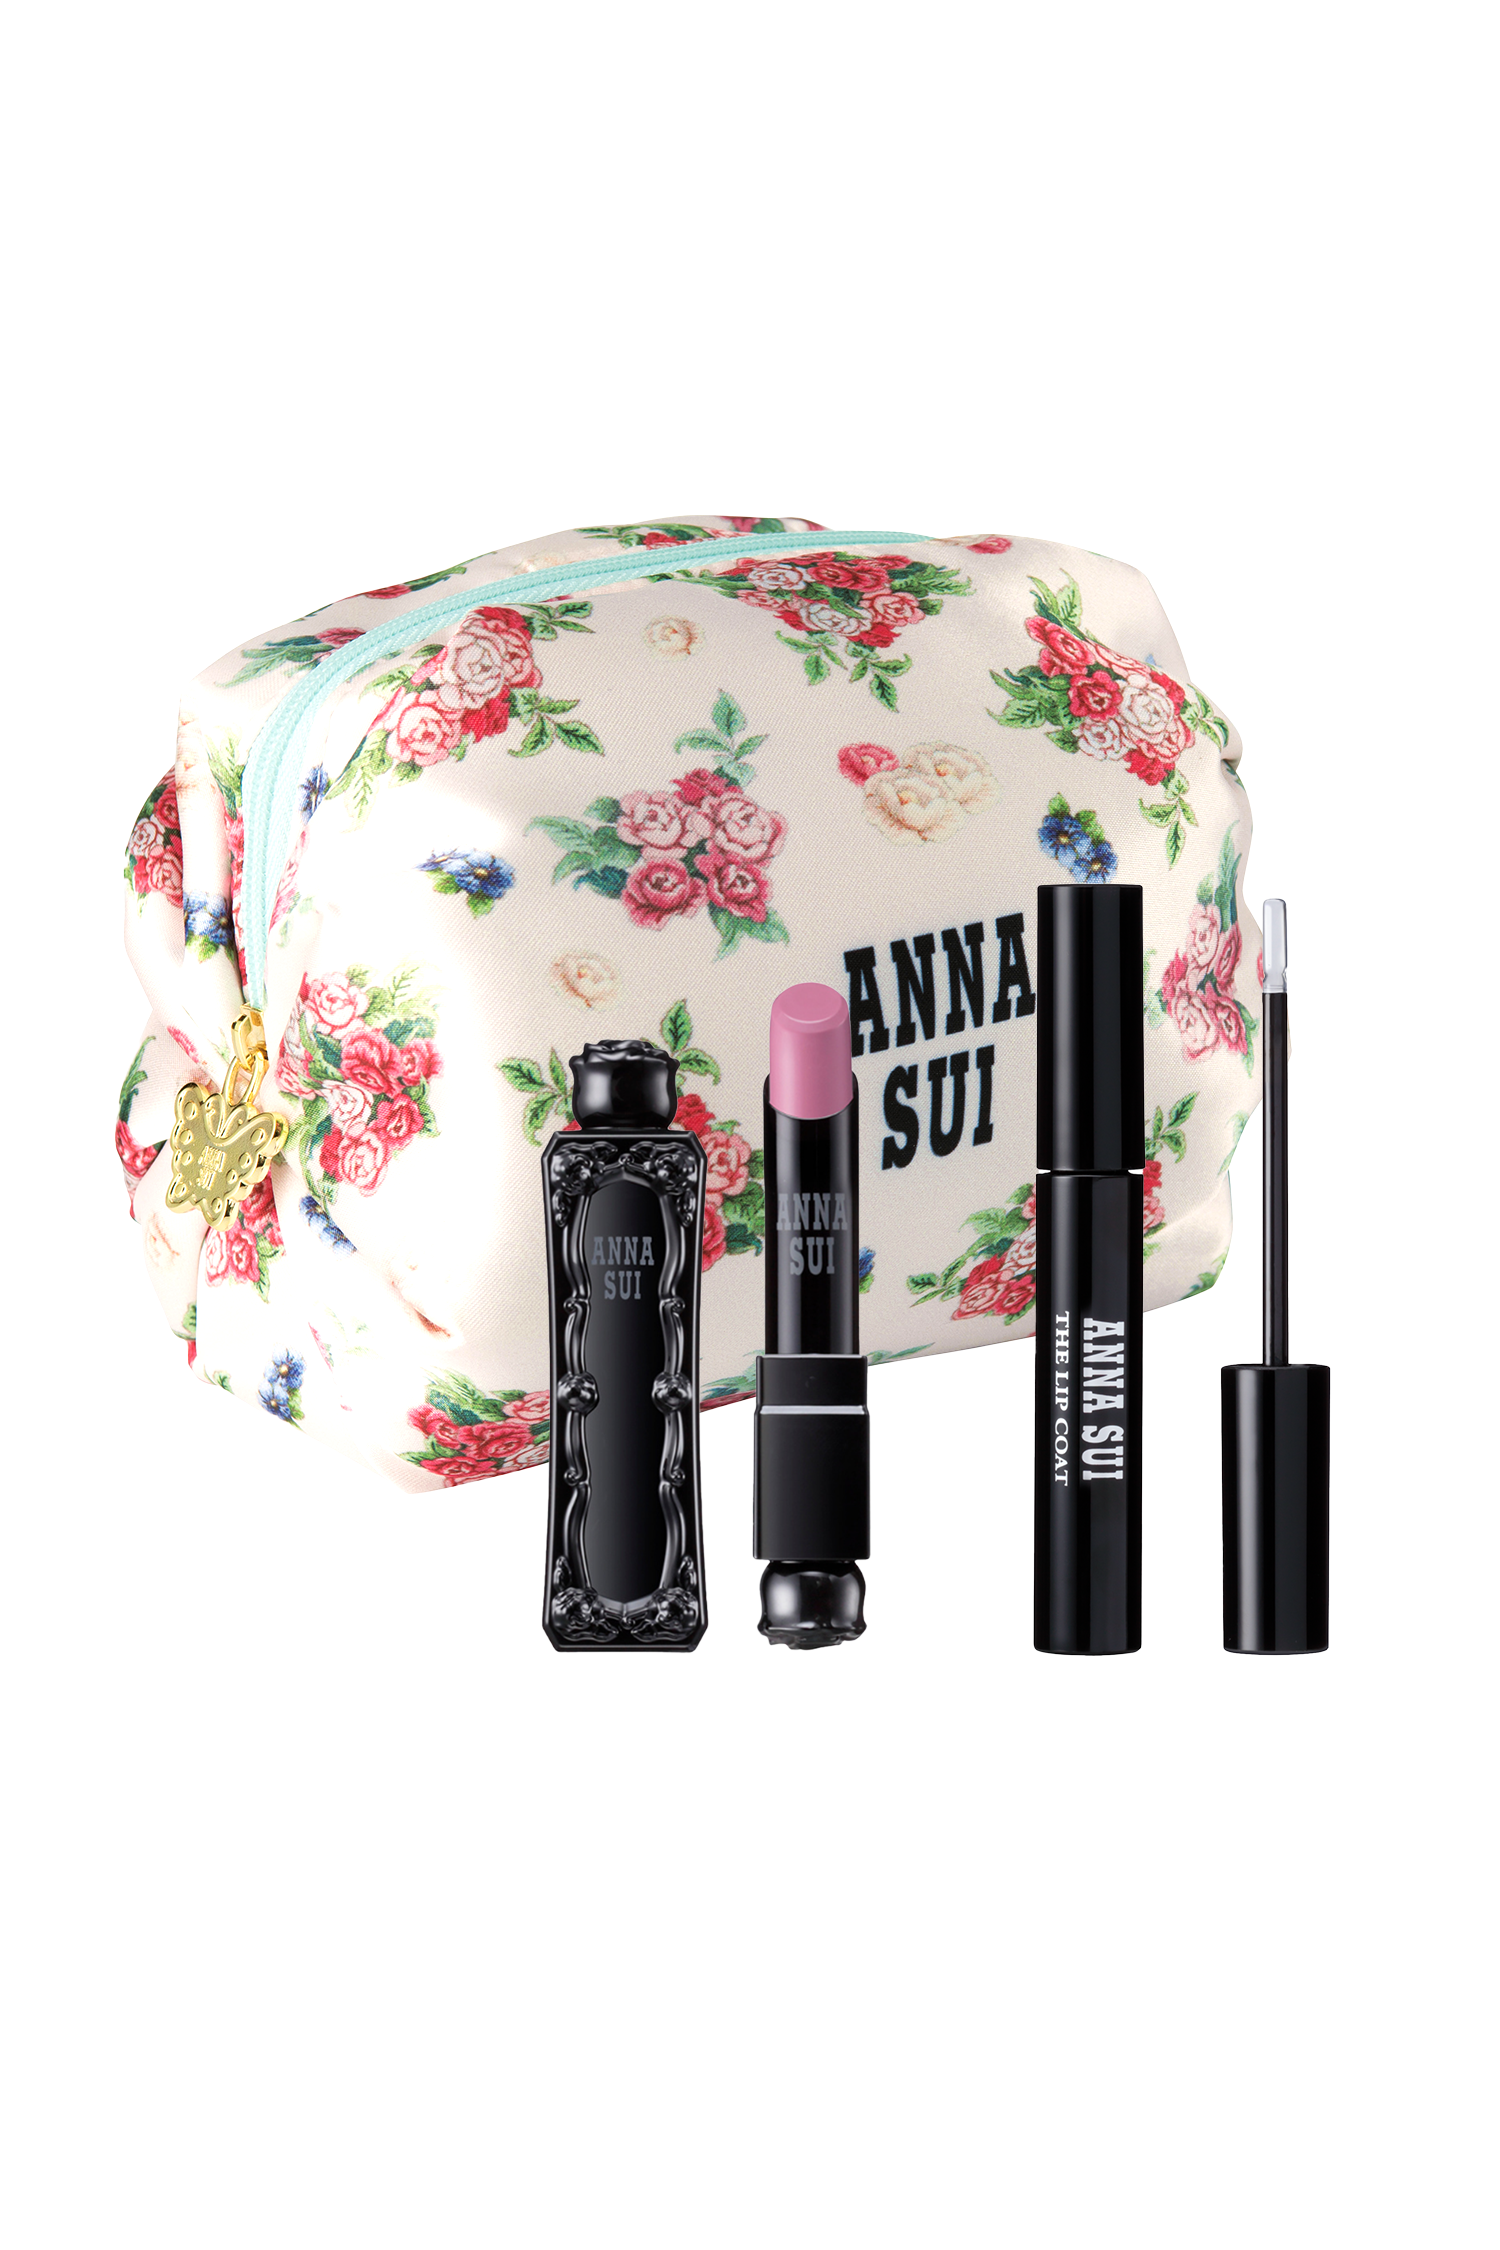 Cosmetic Bag set, beige & floral design, lipstick MAUVE, & lip coat in black containers